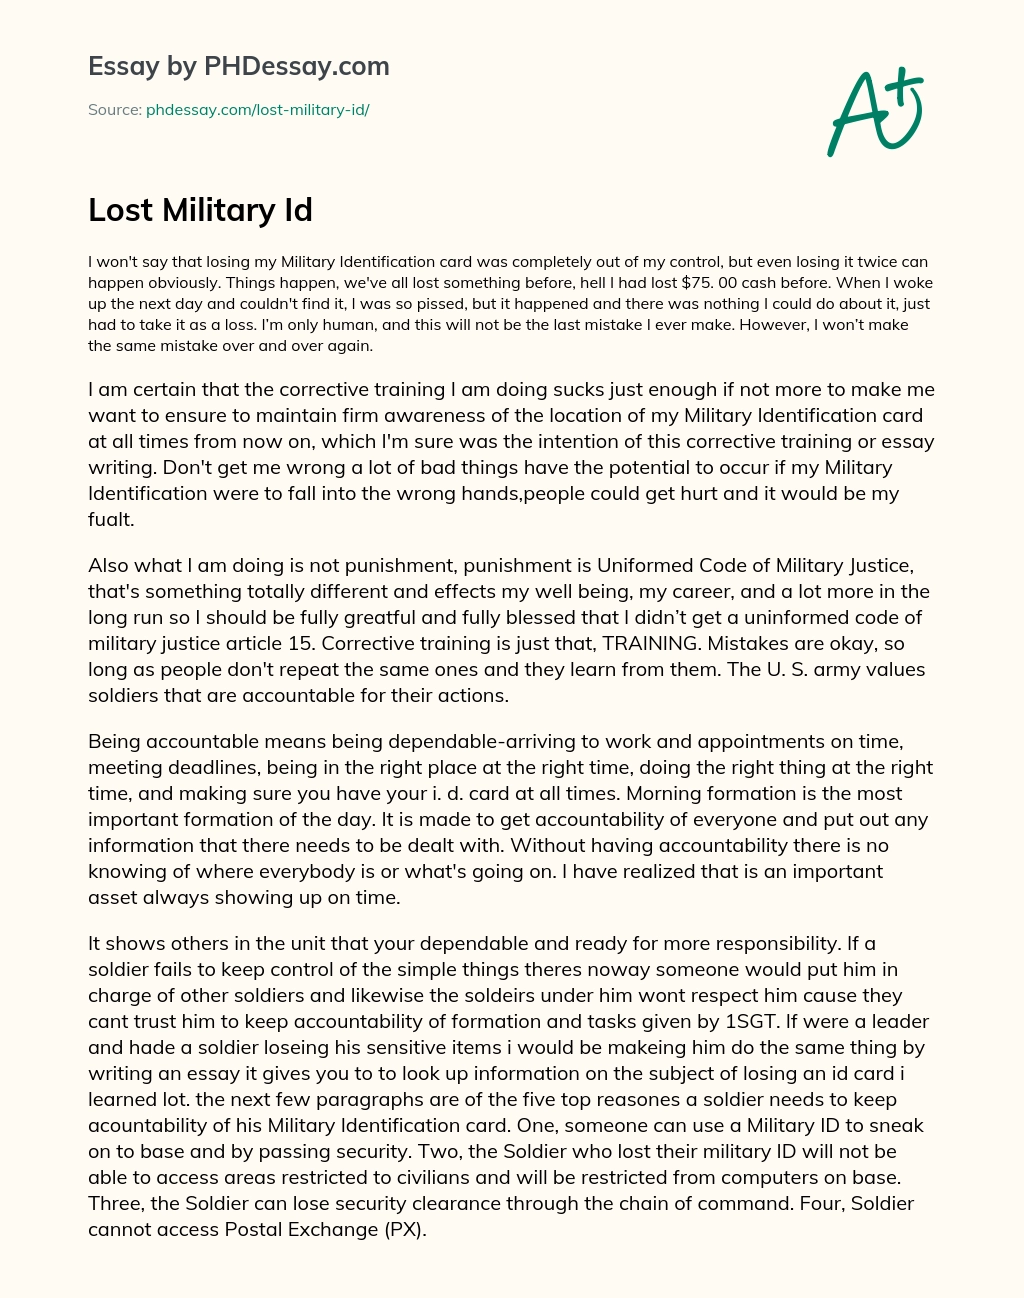 Lost Military Id essay